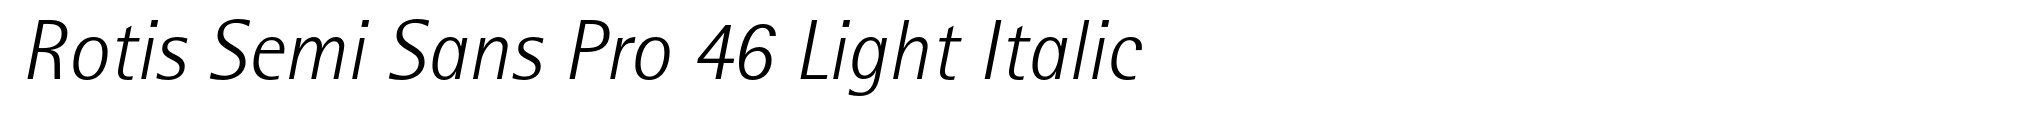 Rotis Semi Sans Pro 46 Light Italic image